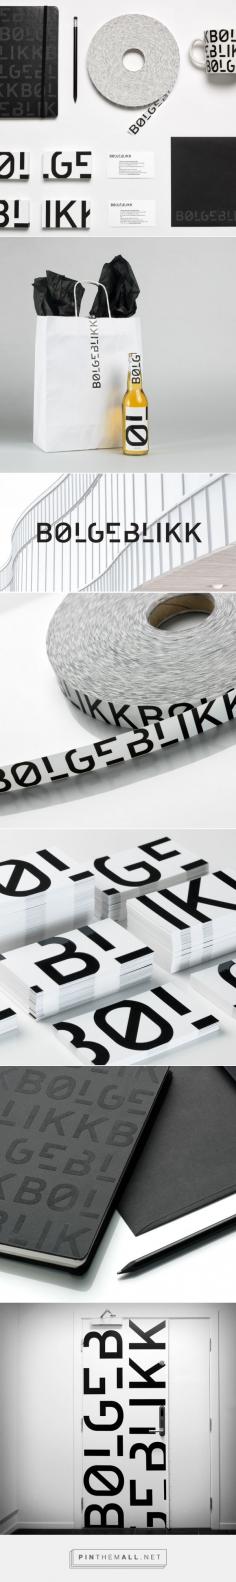 
                    
                        Bølgeblikk - Tank Design branding packaging and more curated by Packaging Diva PD. Who speaks Norwegian : )
                    
                